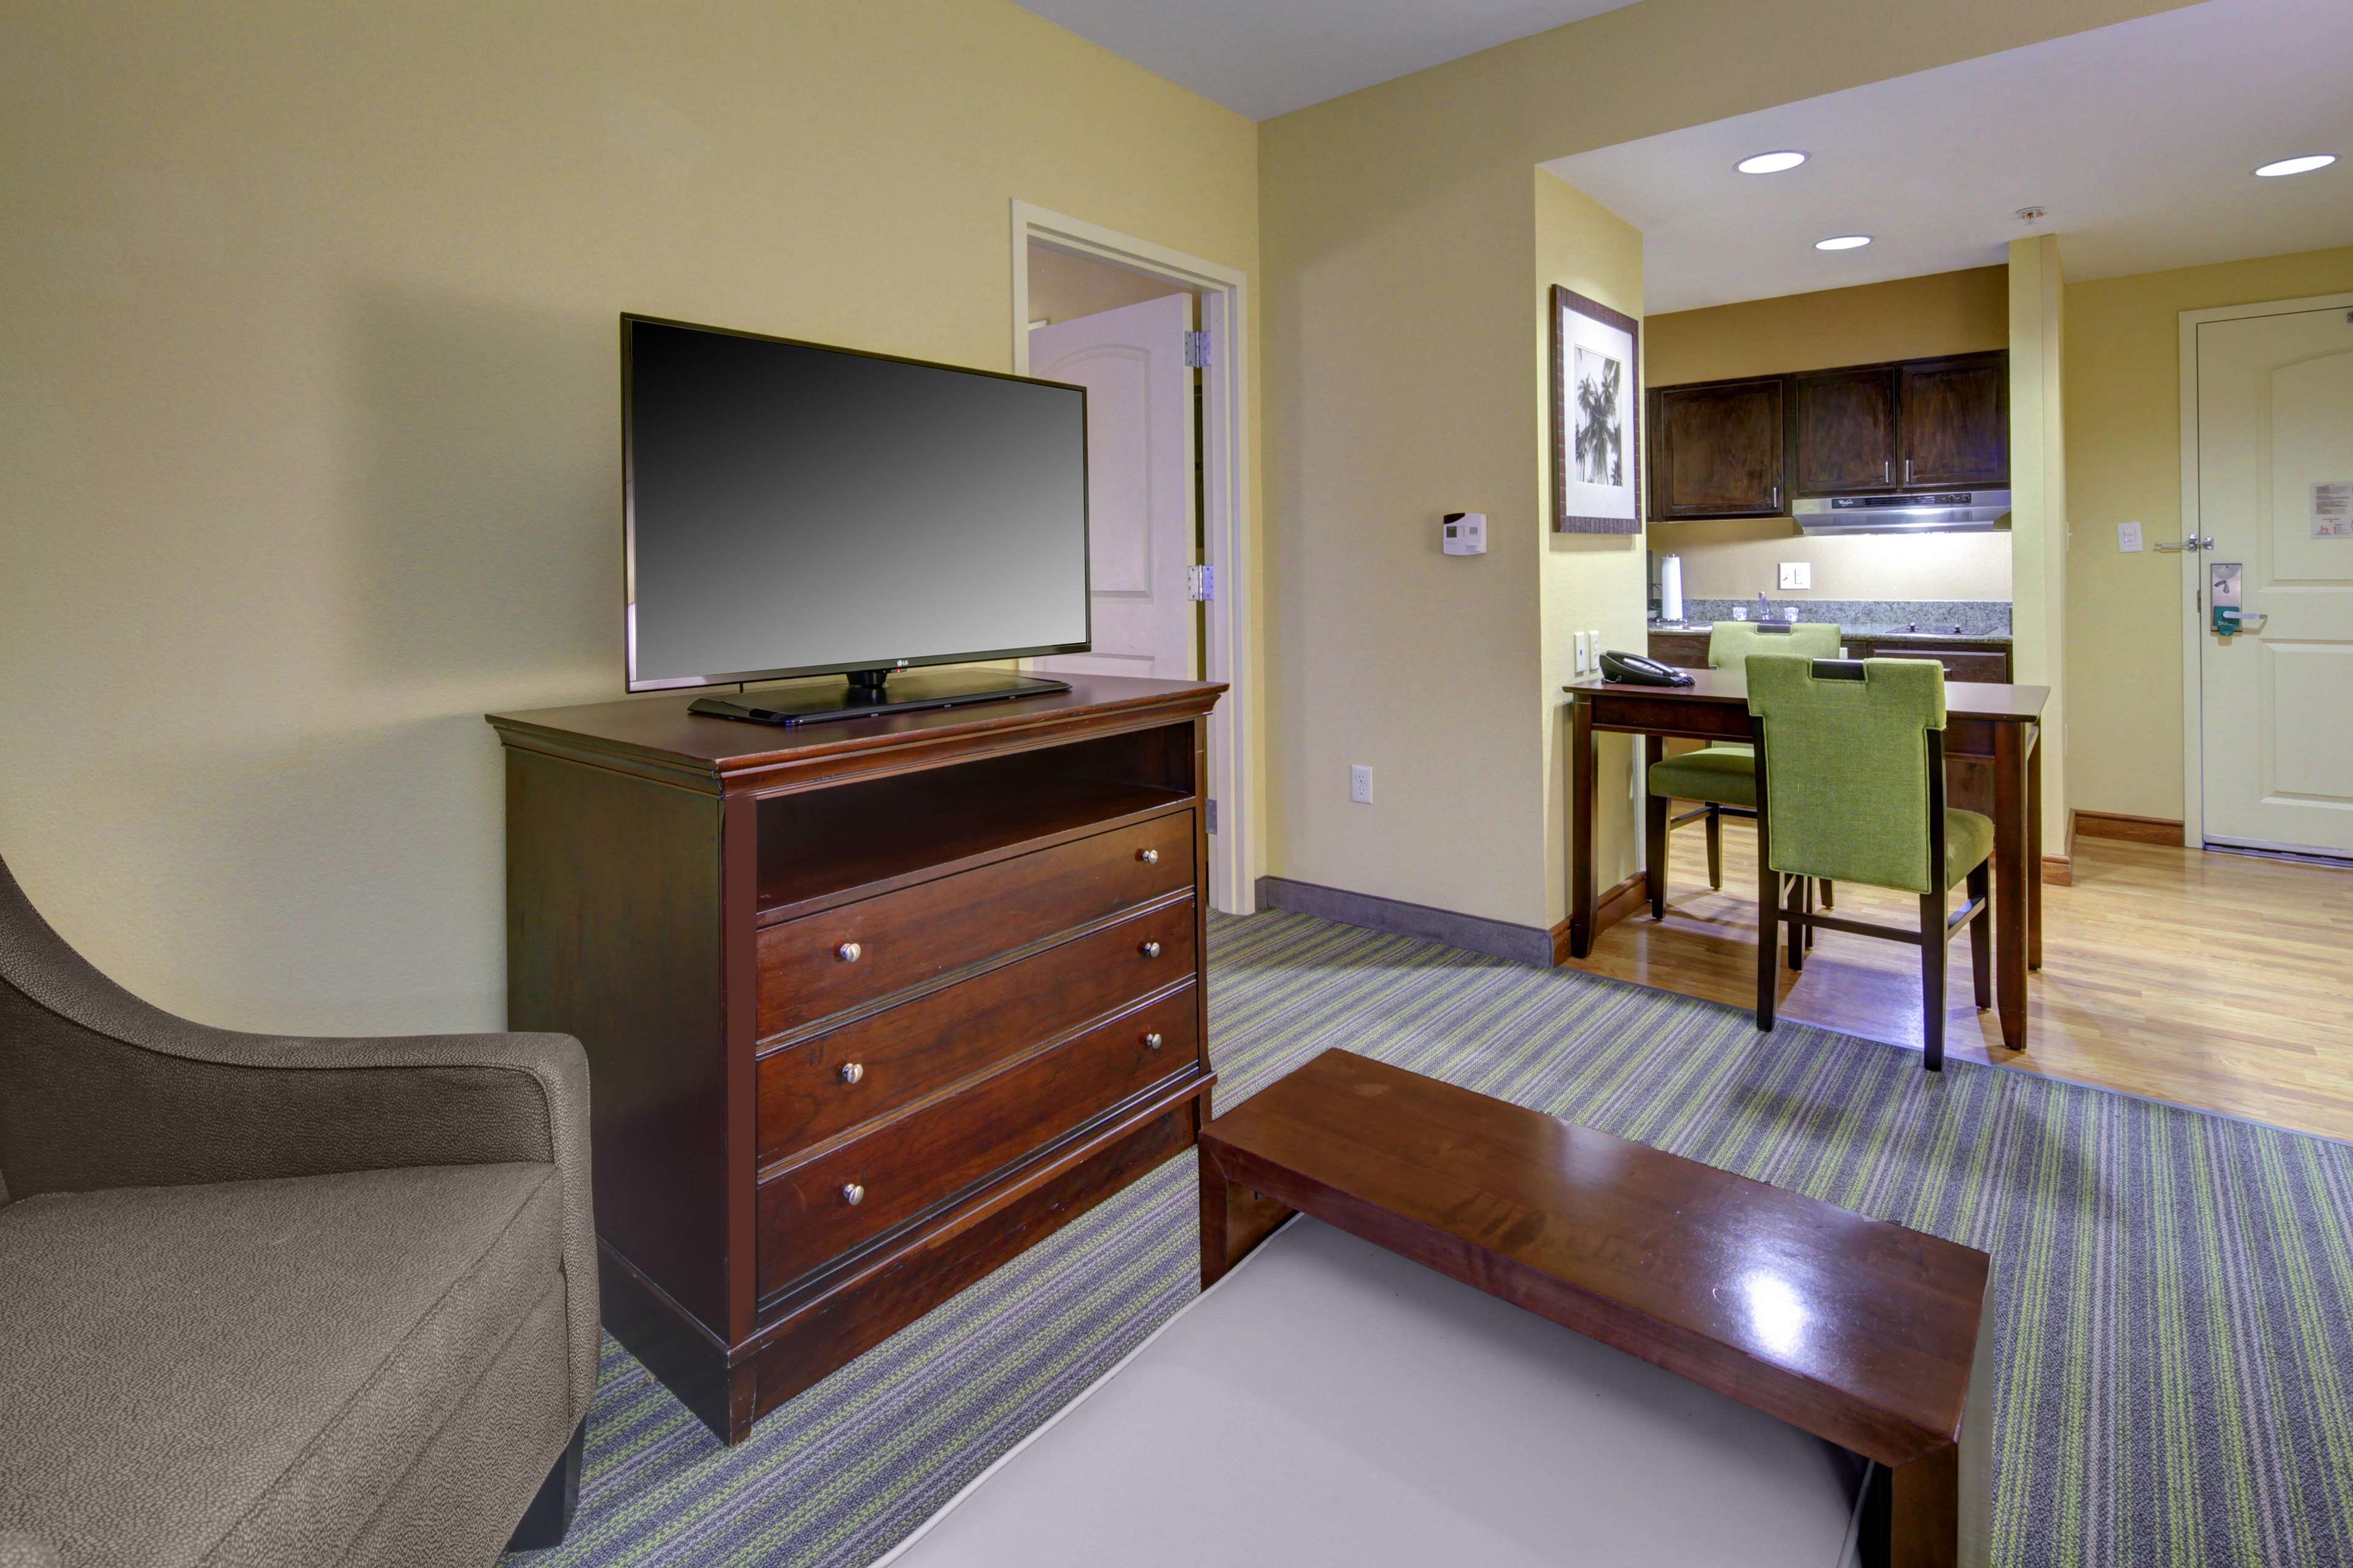 Homewood Suites by Hilton West Palm Beach Photo